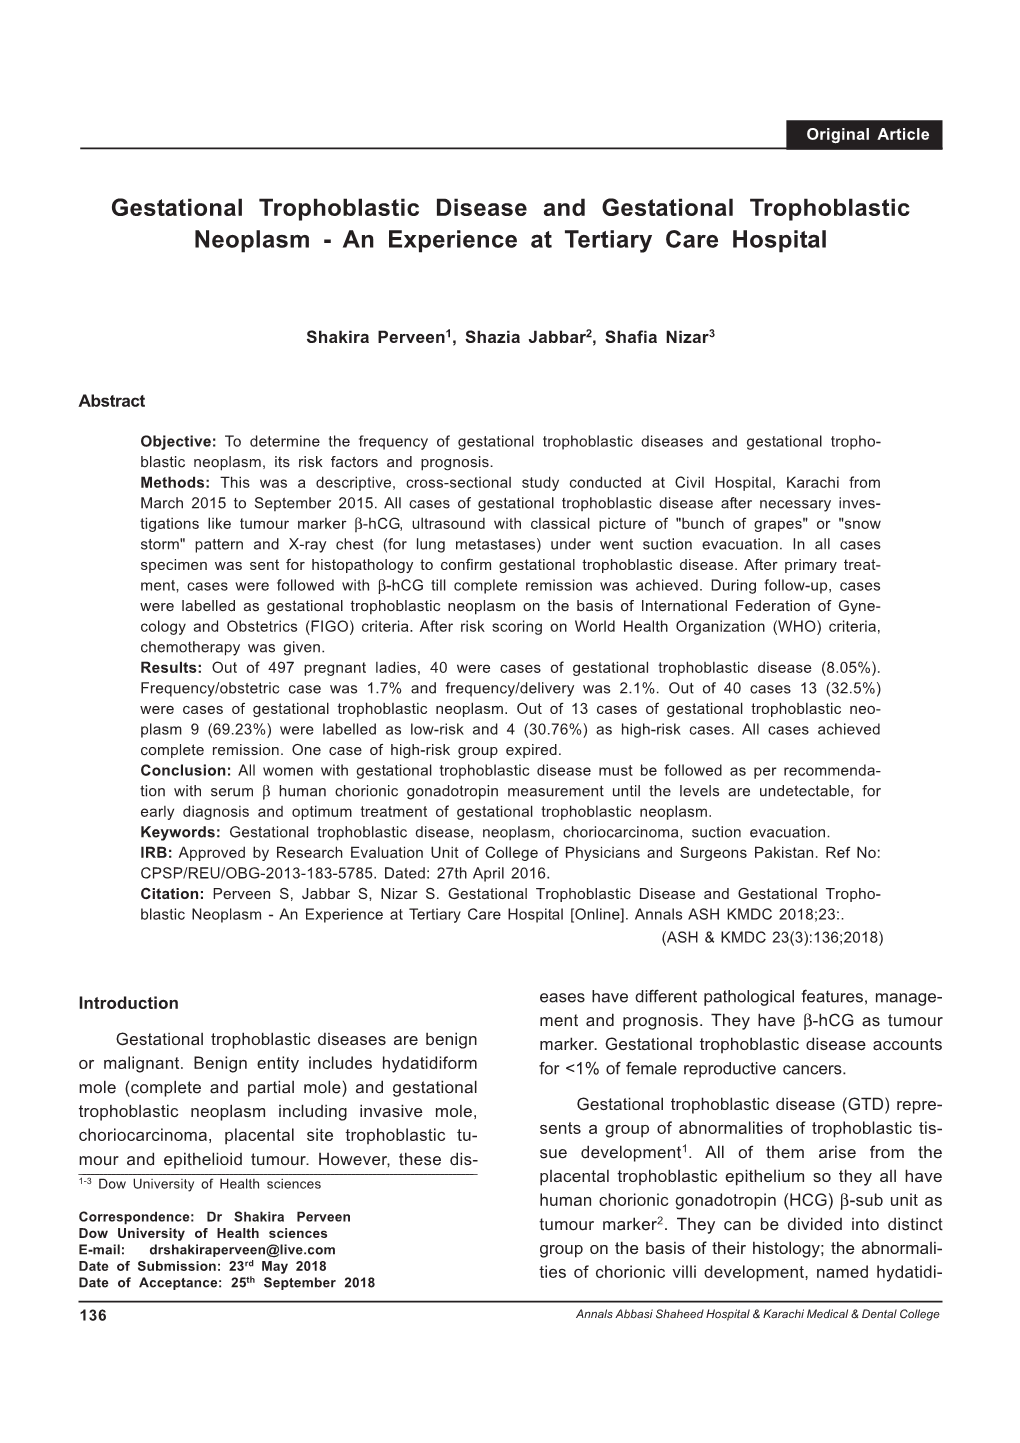 Gestational Trophoblastic Disease and Gestational Trophoblastic Neoplasm - an Experience at Tertiary Care Hospital